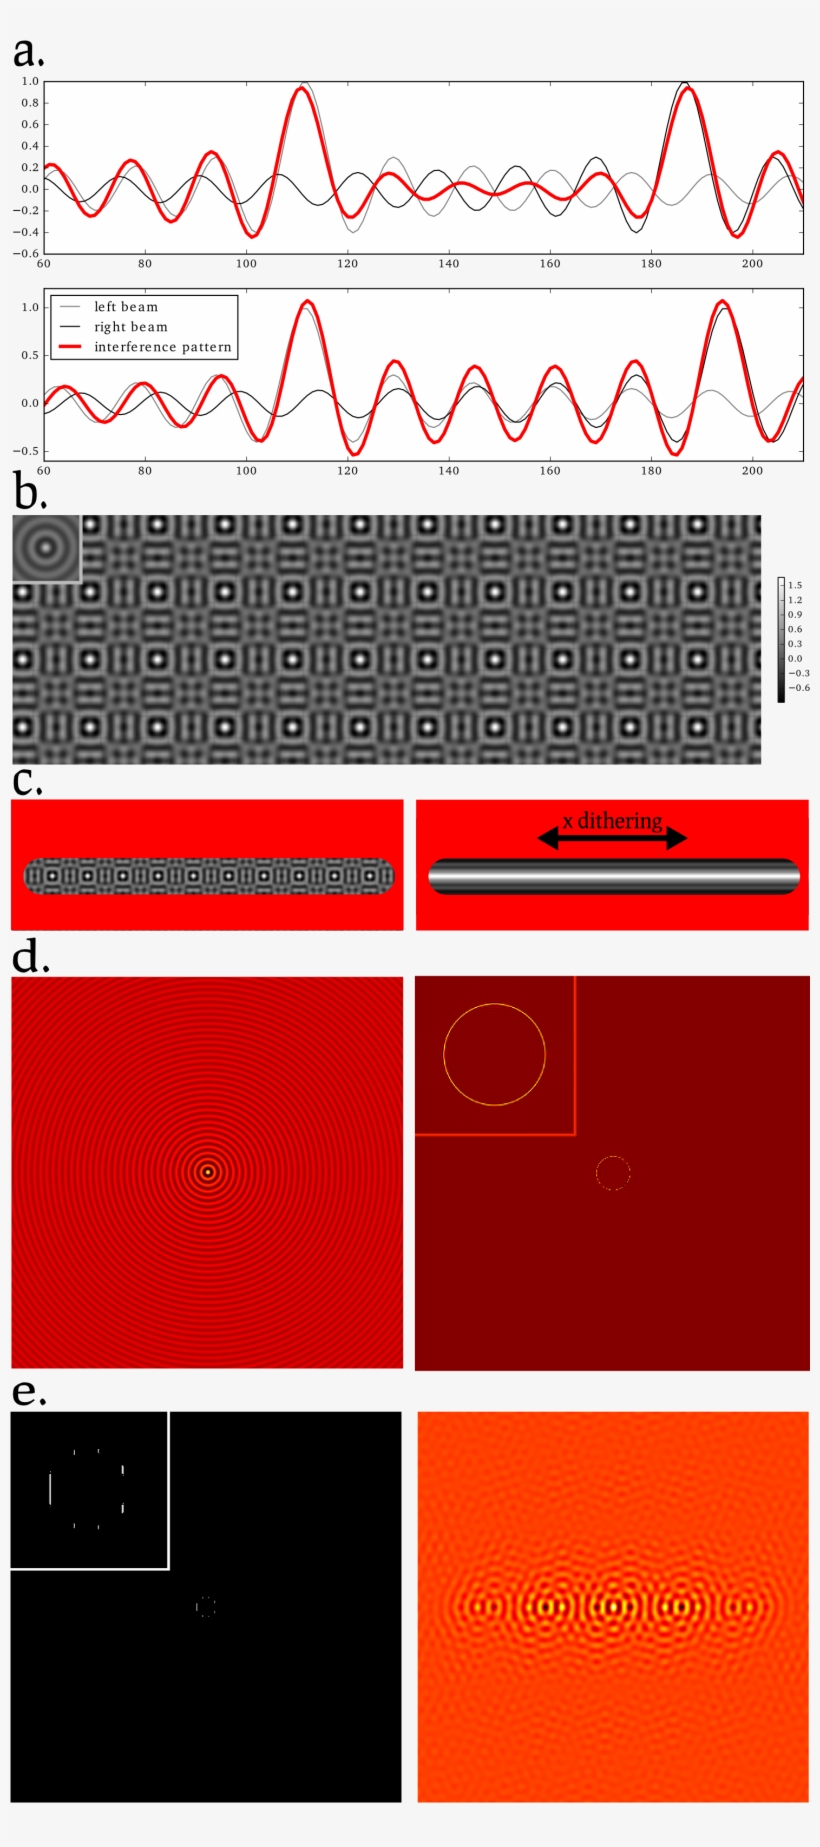 Lattice Light Sheet Theory - Lattice Light-sheet Microscopy, transparent png #3031265